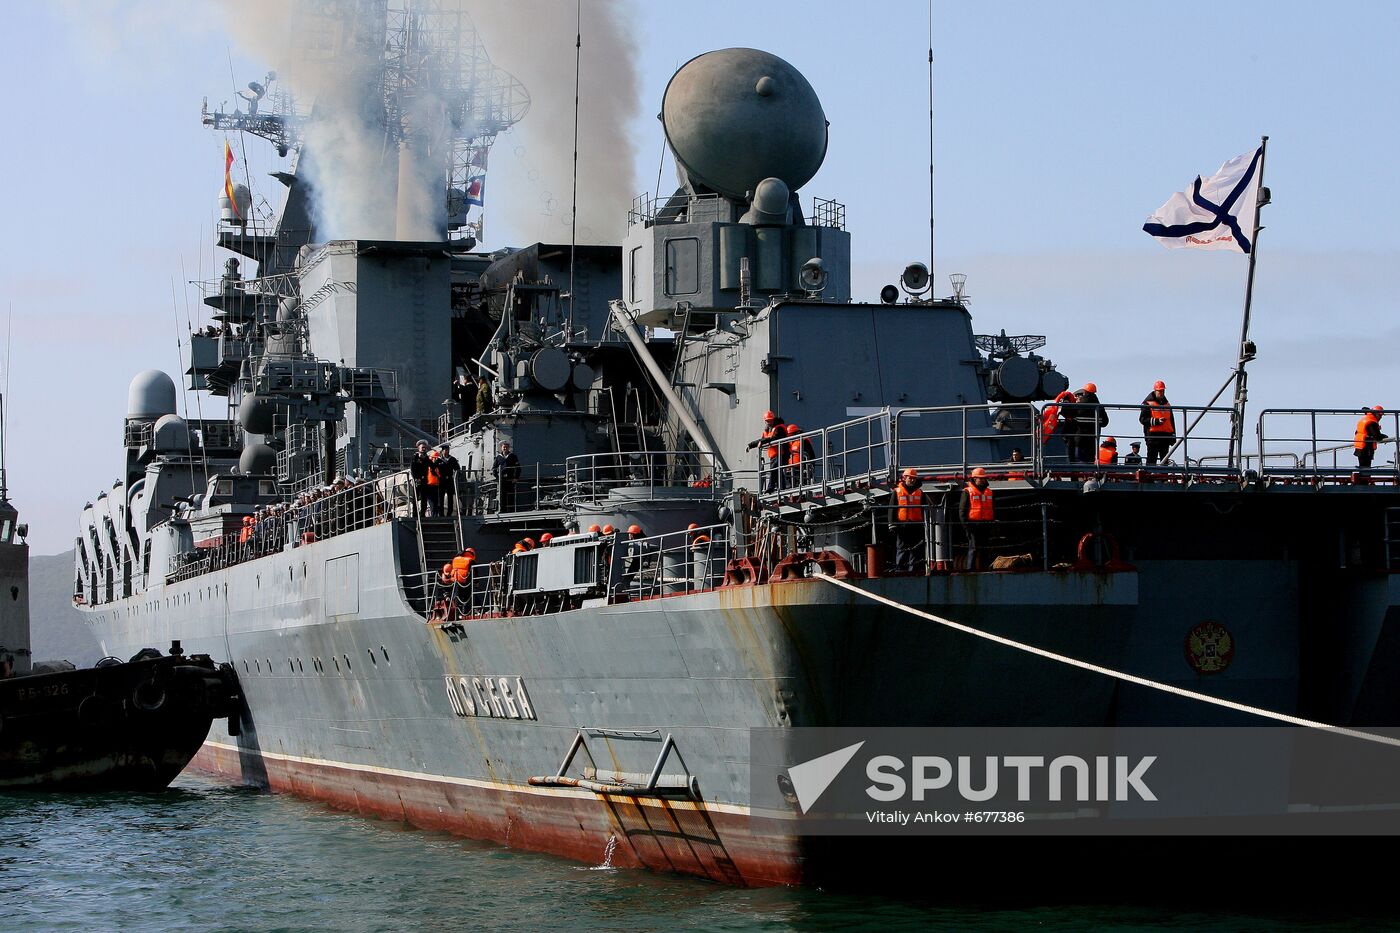 Cruiser "Moskva" is docked